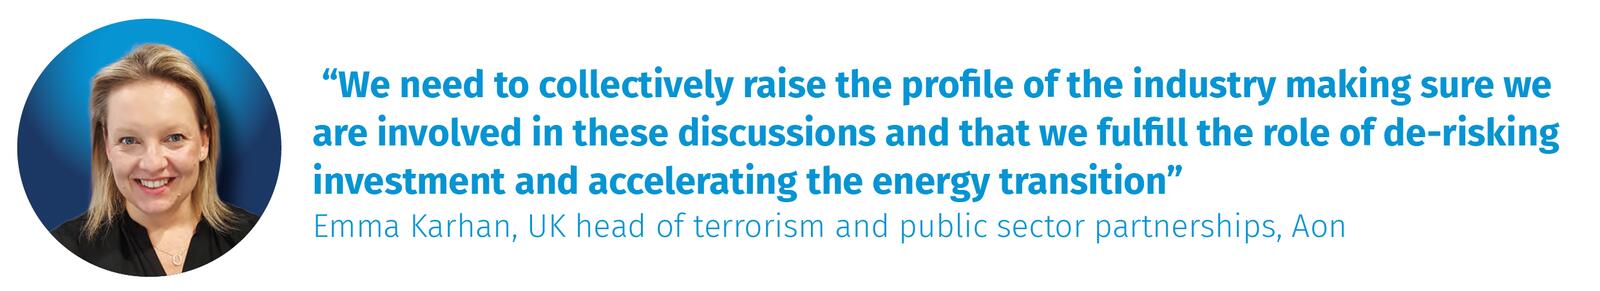 Emma Karhan, UK head of terrorism and public sector partnerships, Aon 2